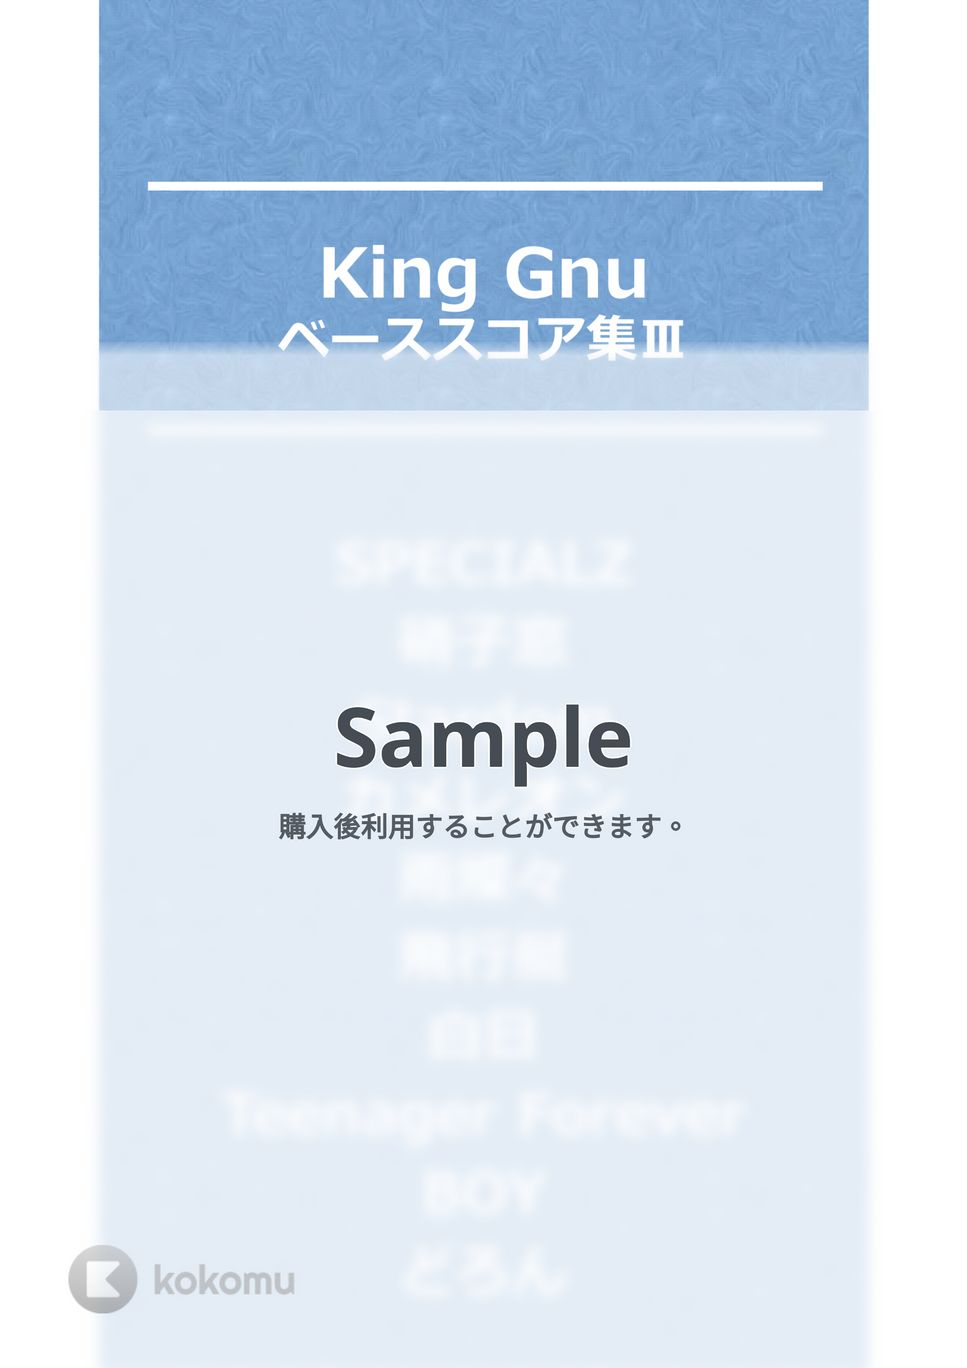 King Gnu - King Gnu ベースTAB譜面10曲セット集Ⅰ by たぶべー